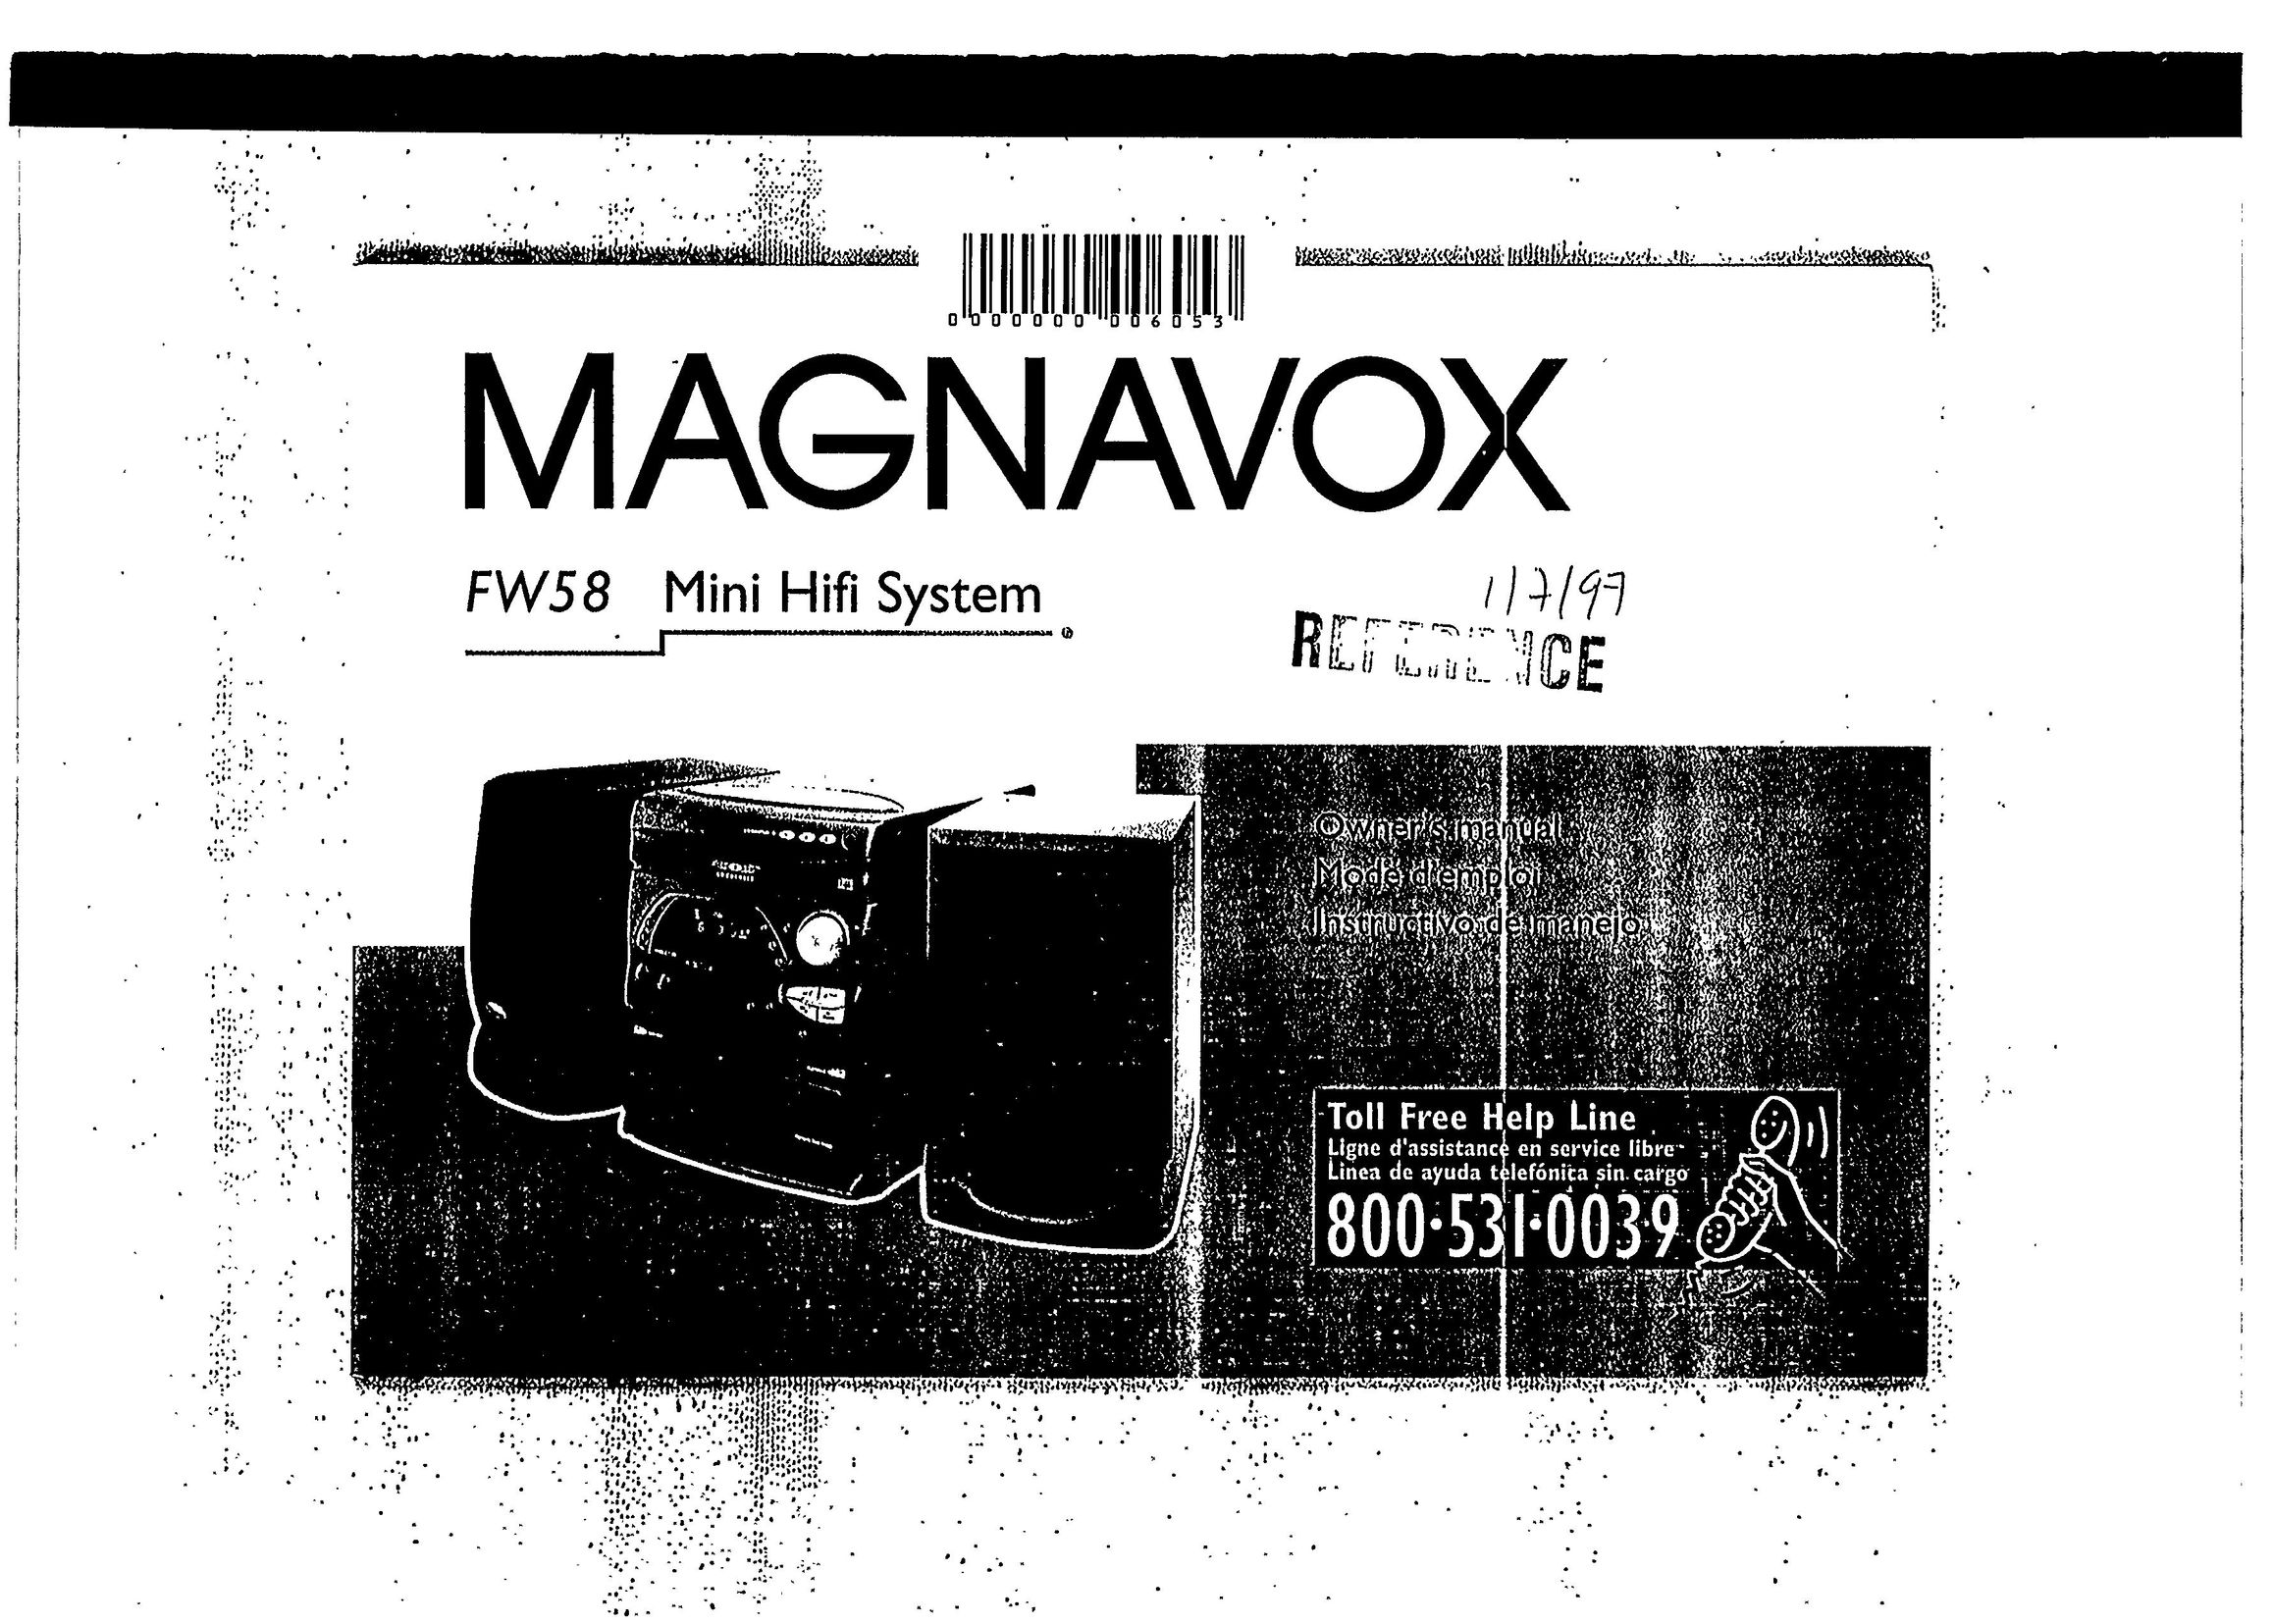 Magnavox FW58 Pet Fence User Manual